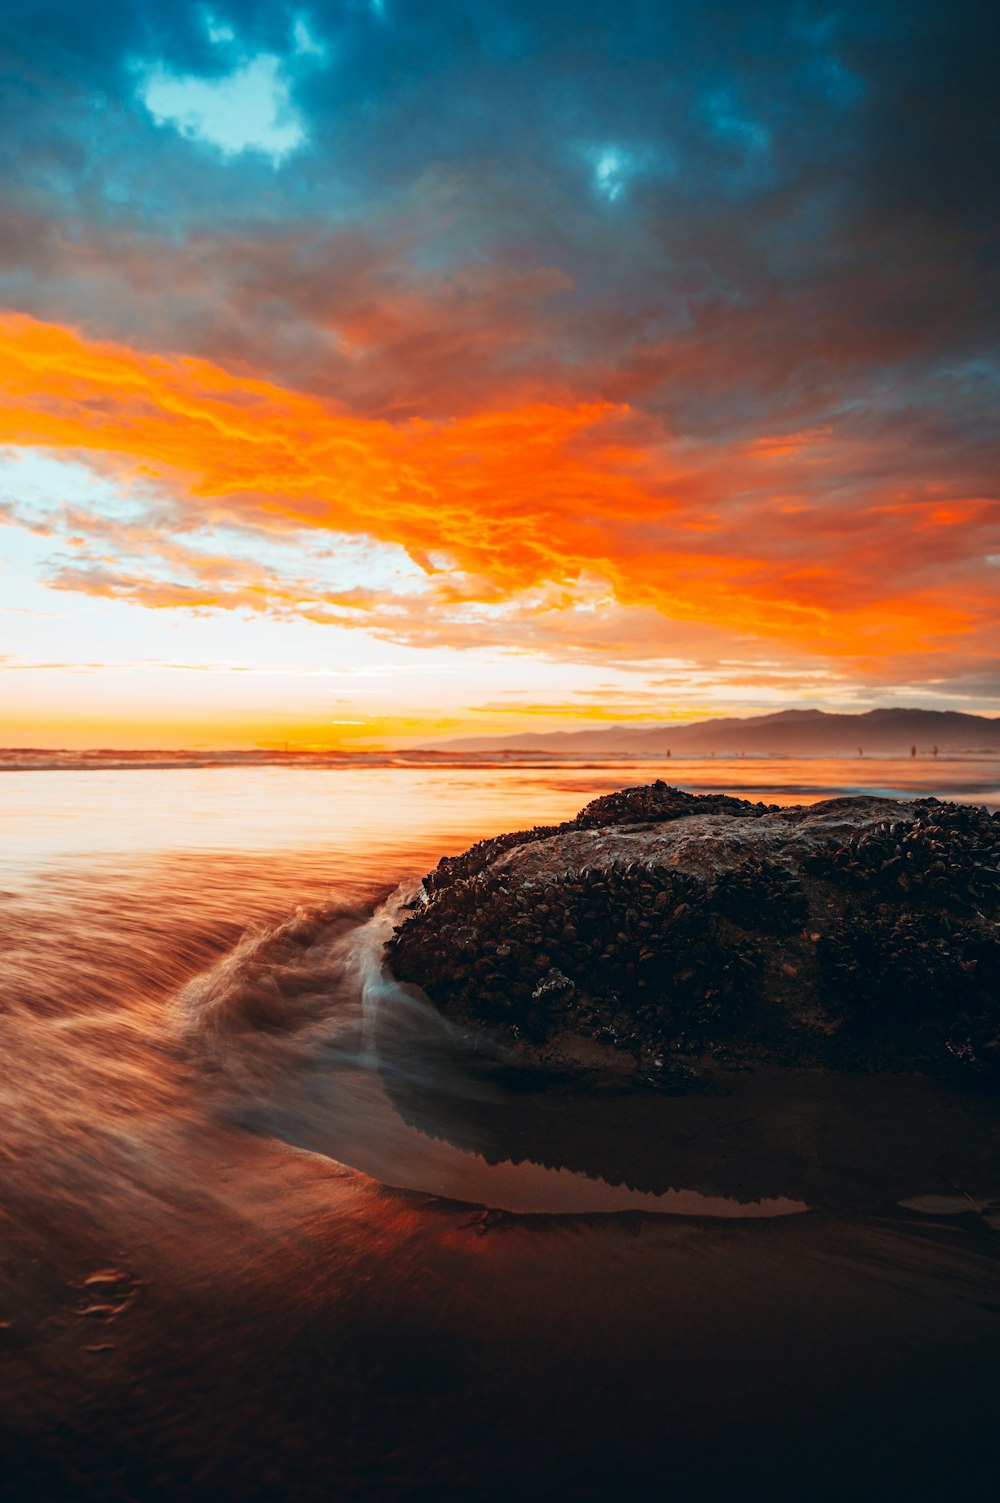 a rocky beach with a sunset